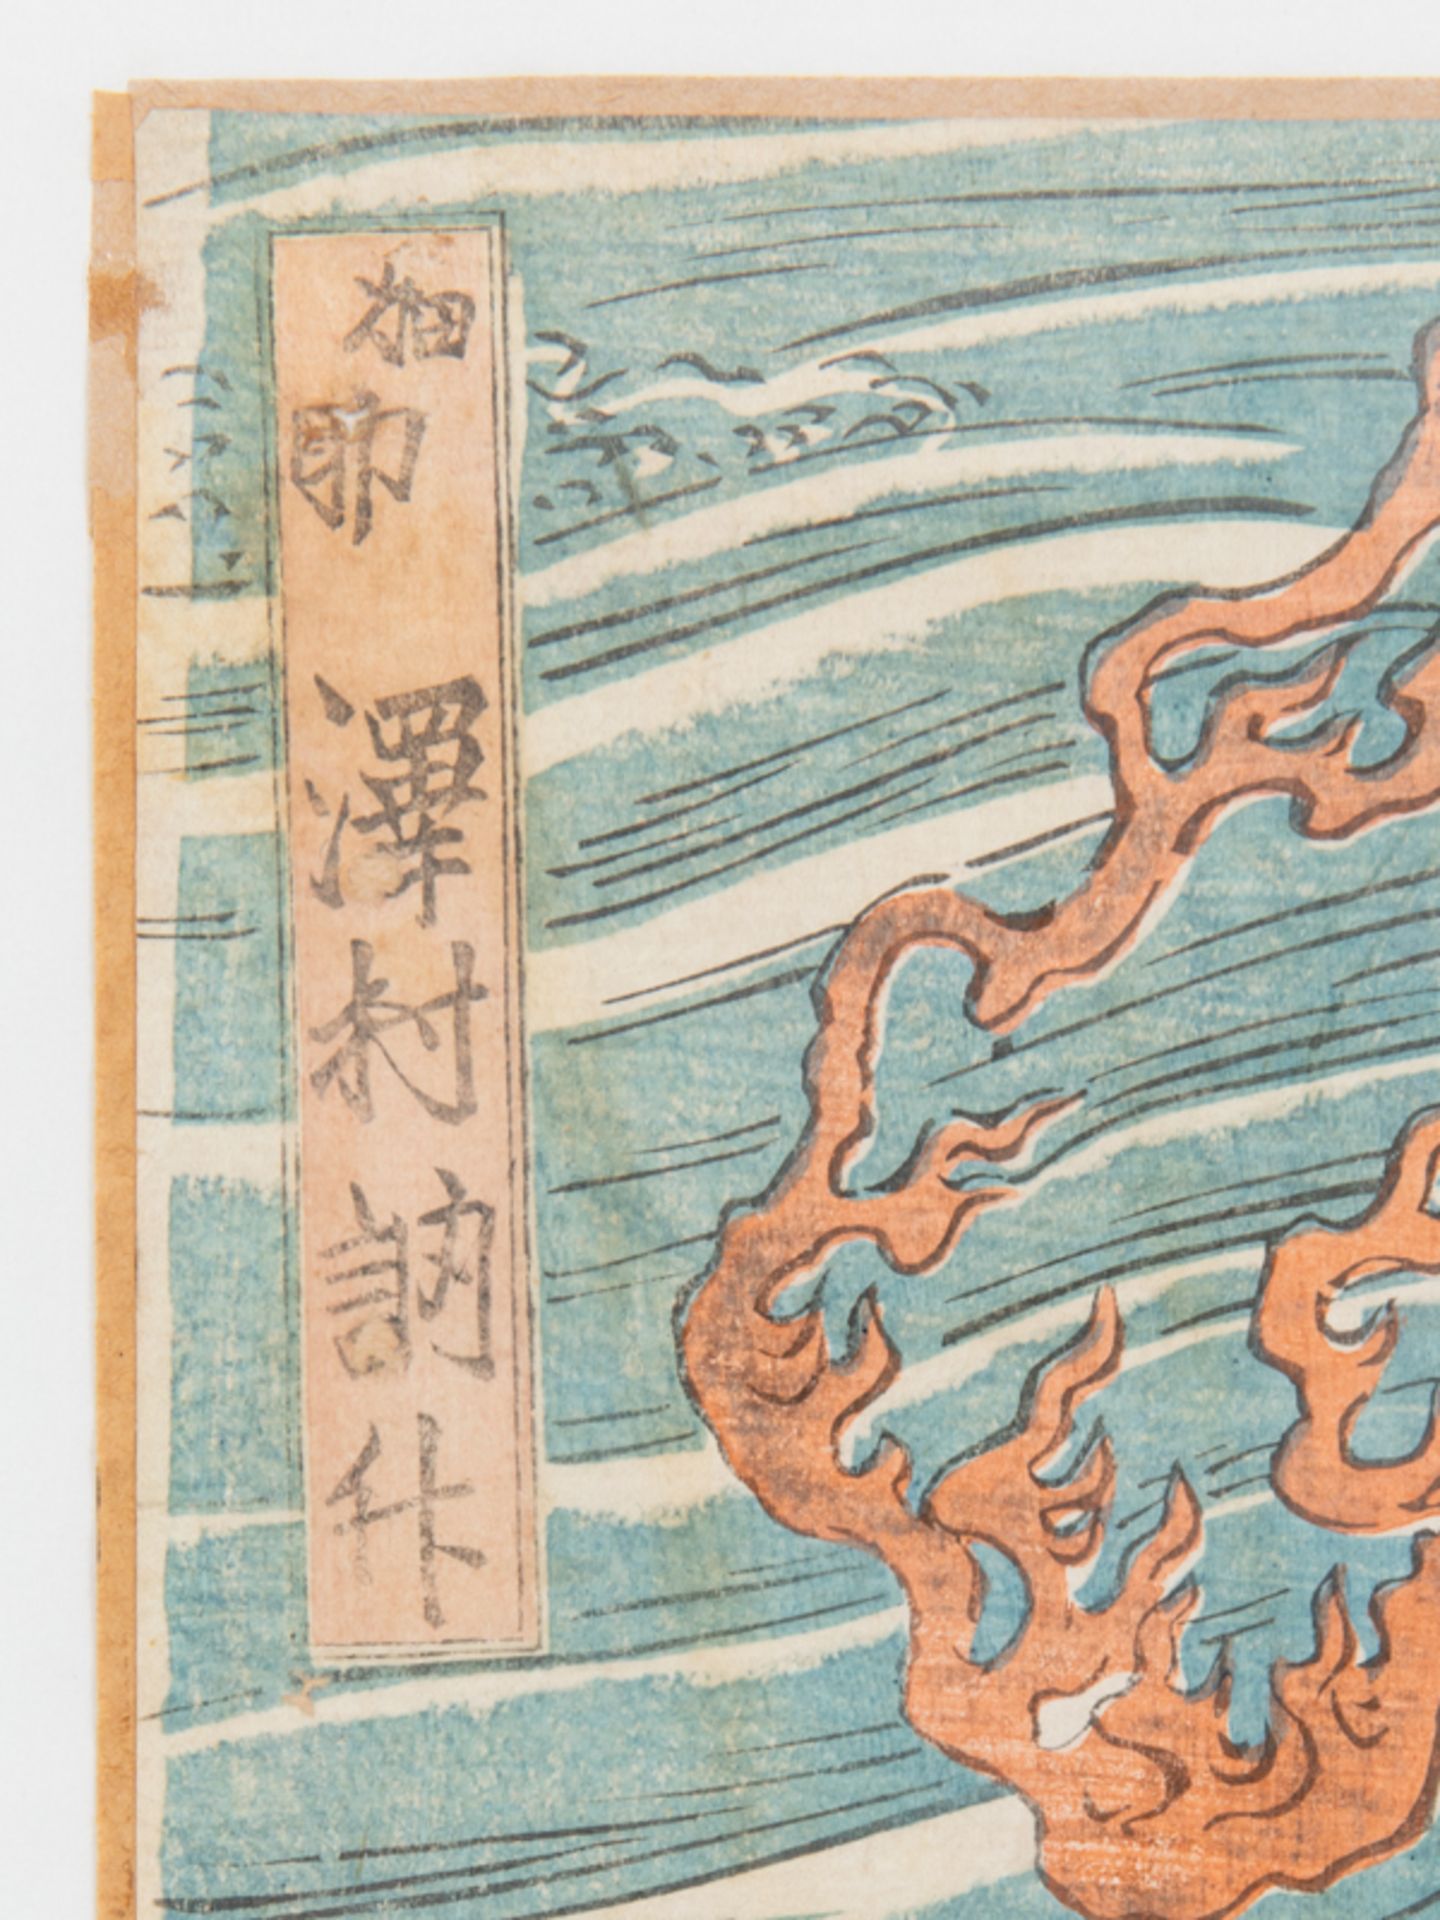 Japanischer Farbholzschnitt "Mythologische Szene - Samurai und Dame im tosenden Meer", 18./19. Jh. - Image 3 of 4